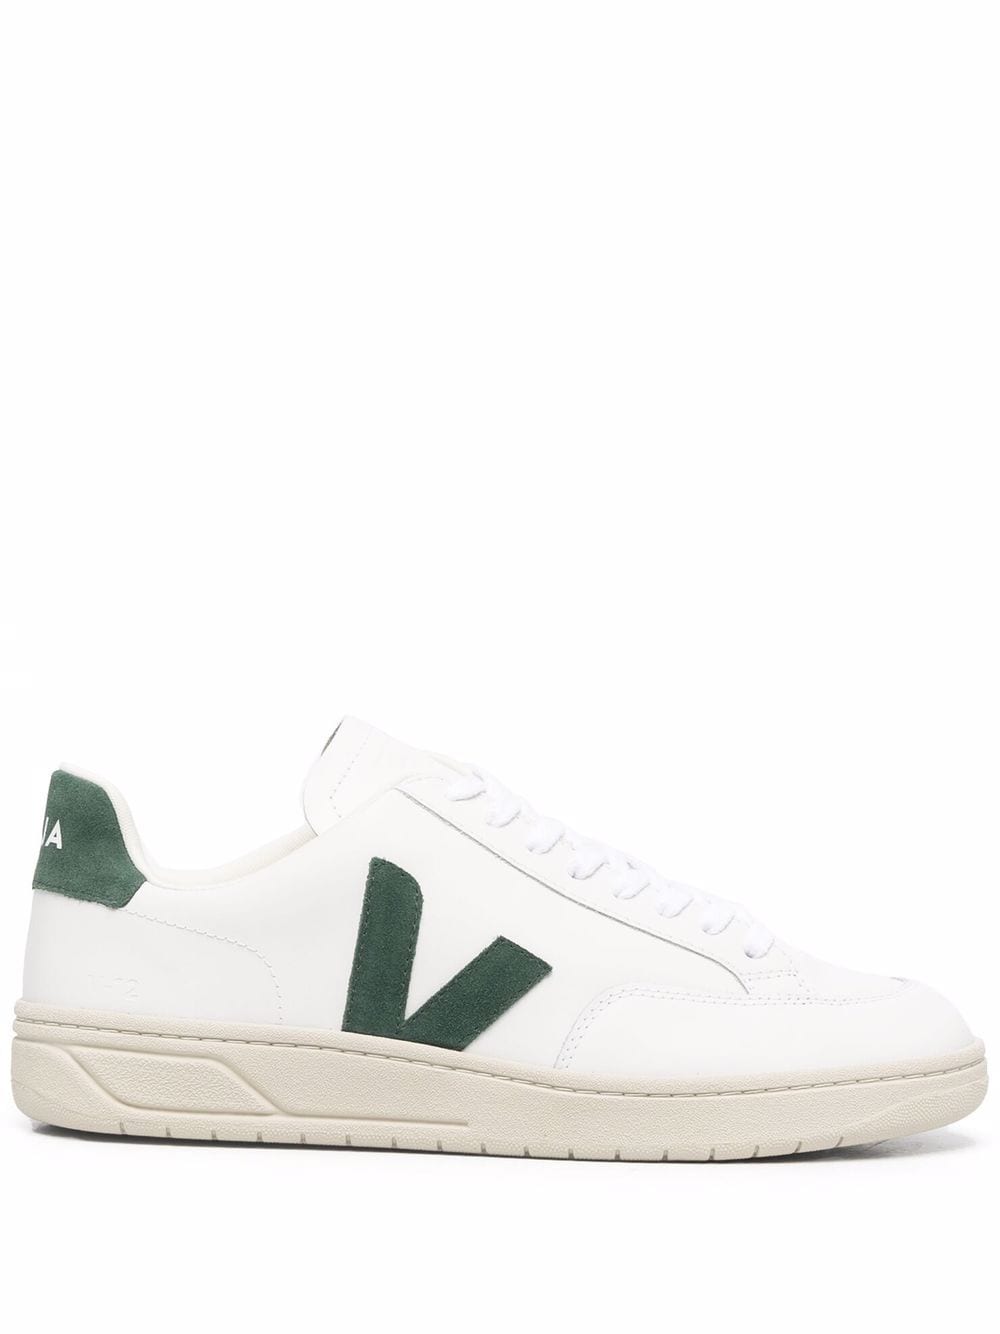 sneaker urca bianca con logo verde